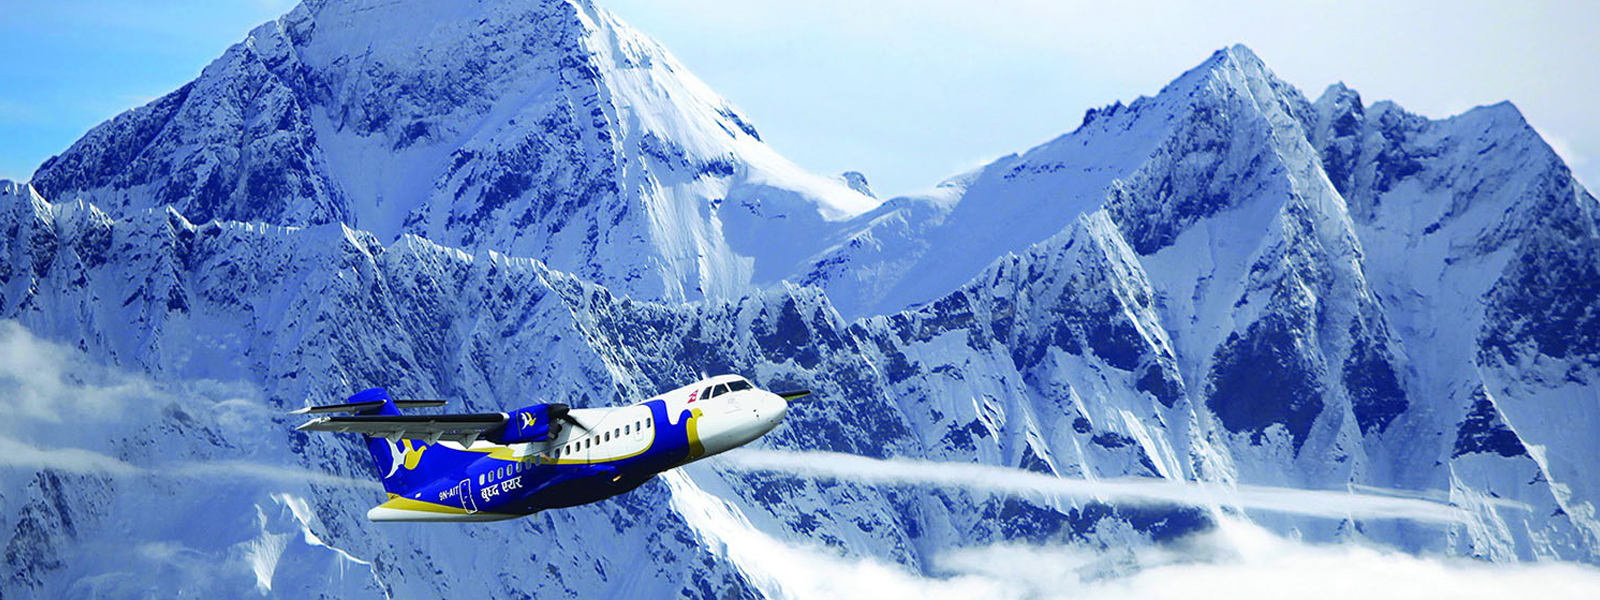 Everest Scenic Flight-Day Tour